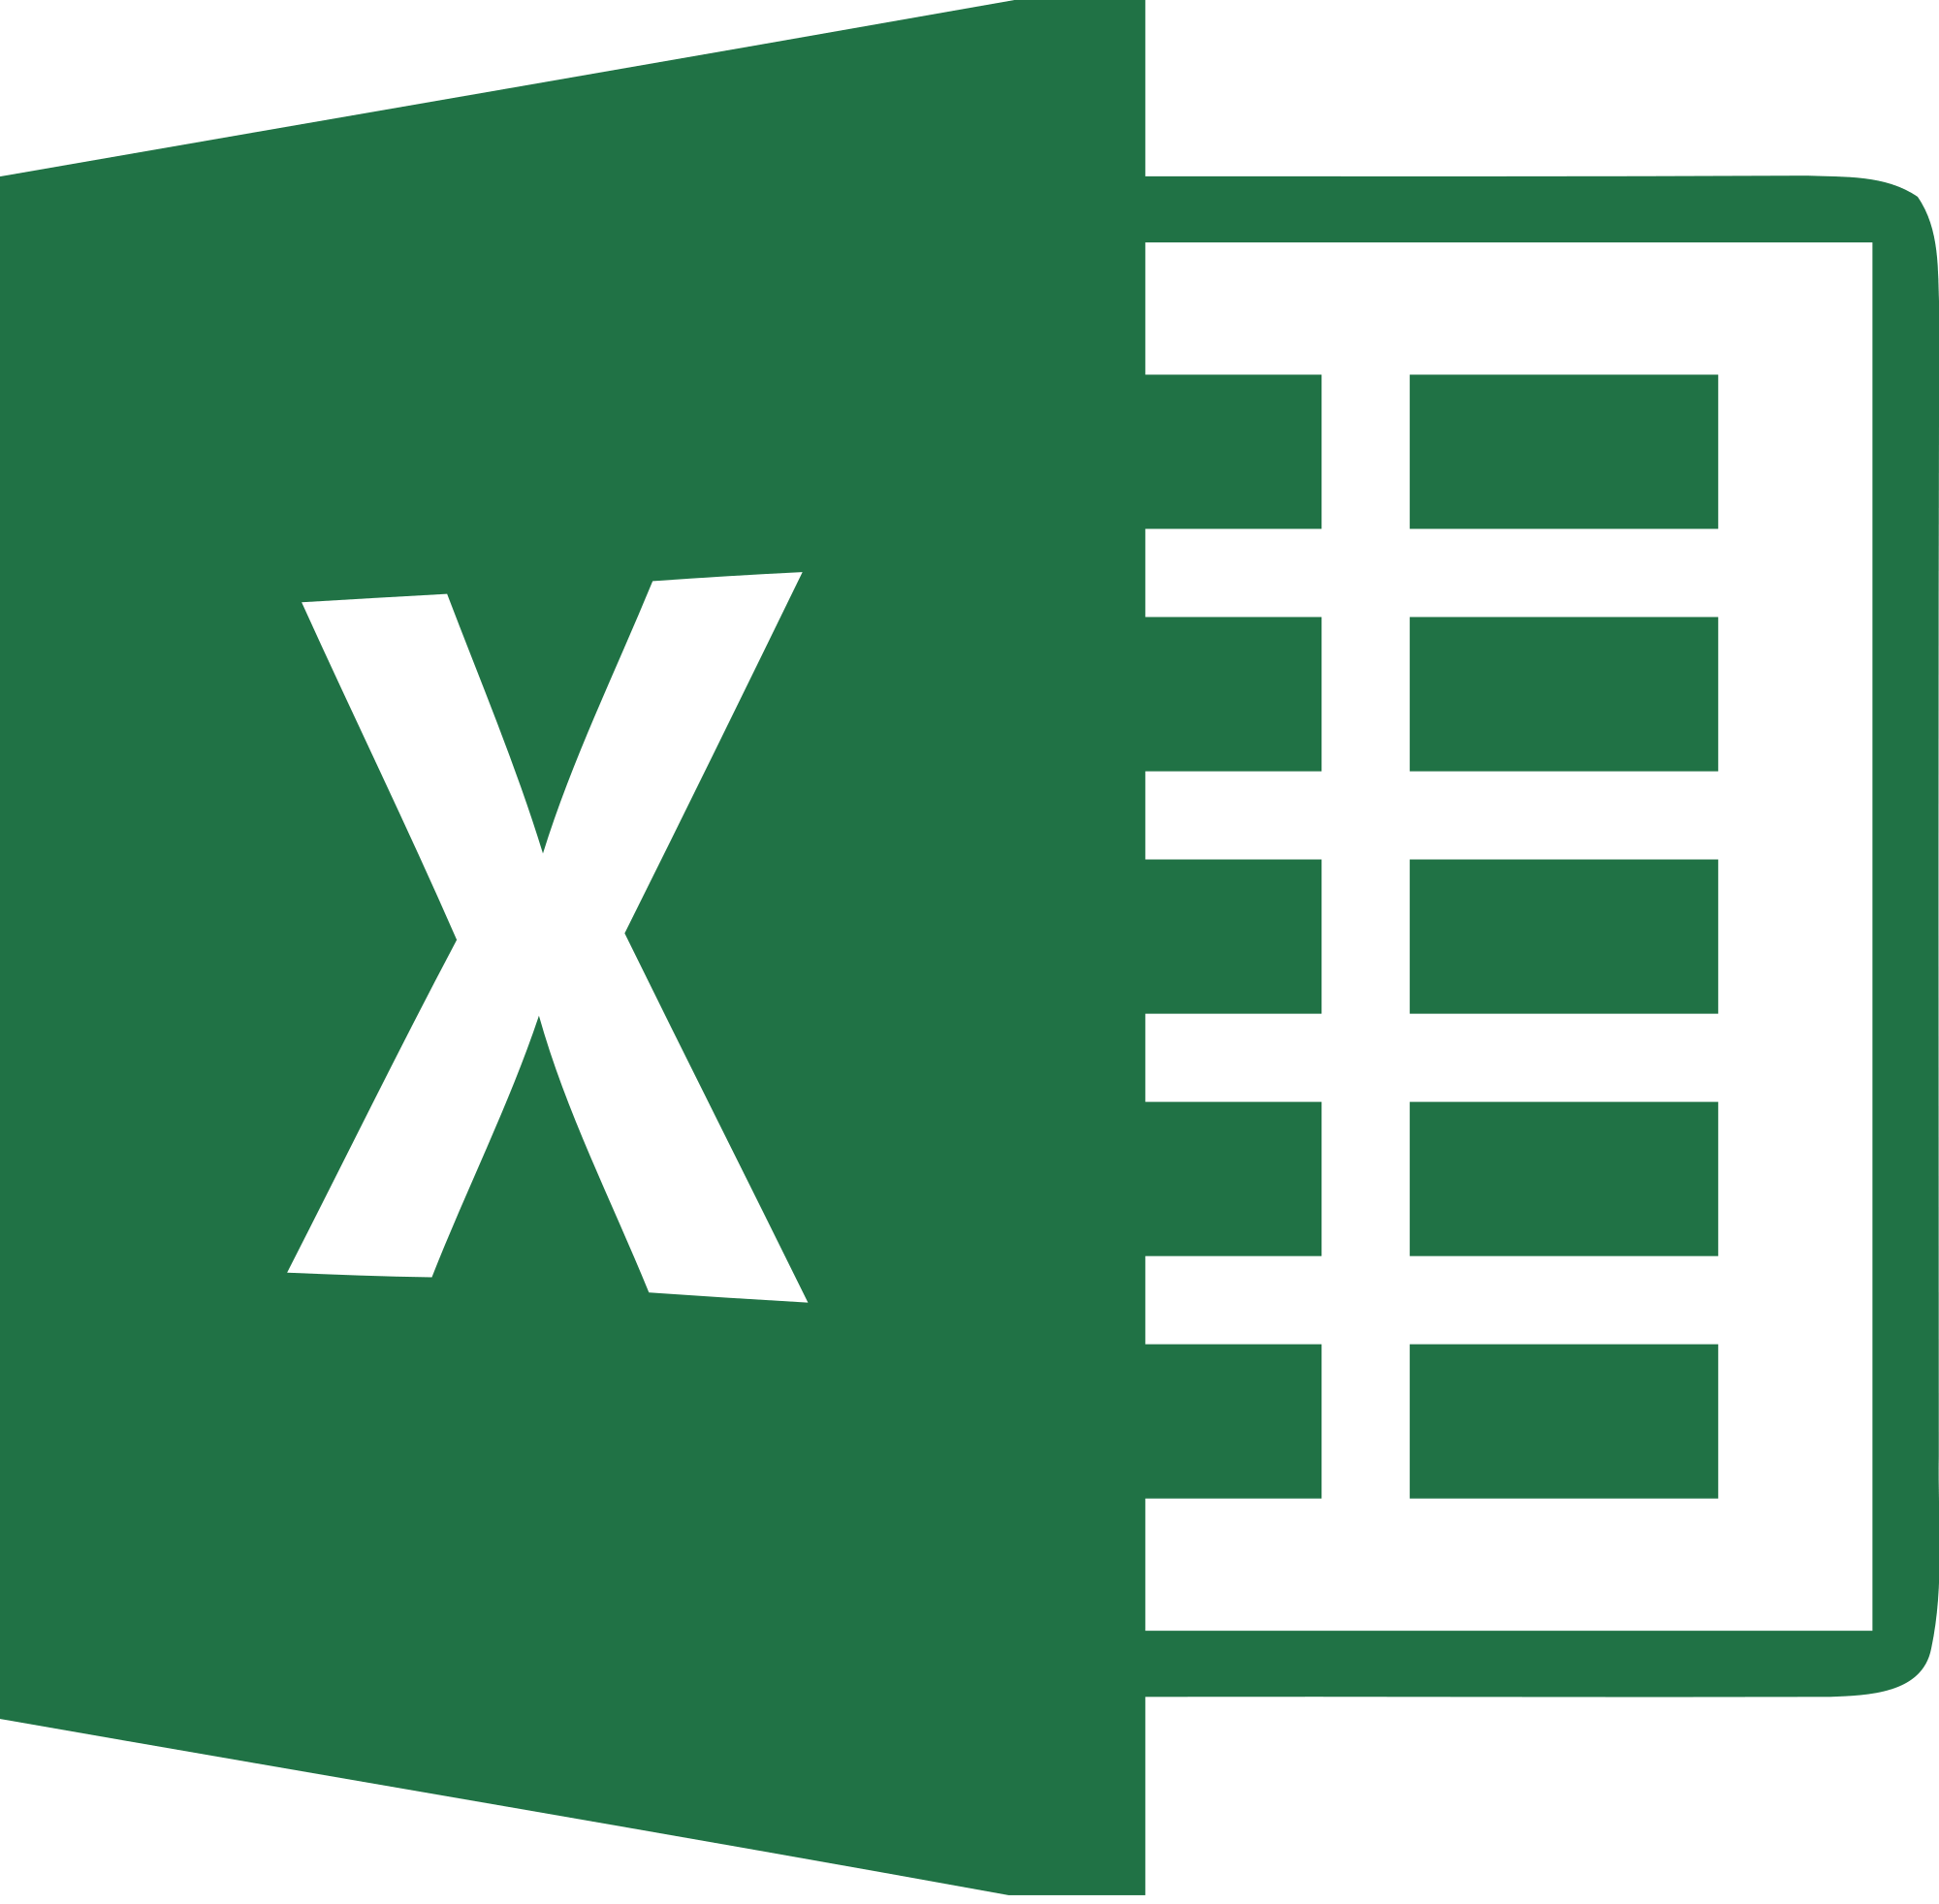 Microsoft Green Logo - File:Microsoft Excel 2013 logo.svg - Wikimedia Commons